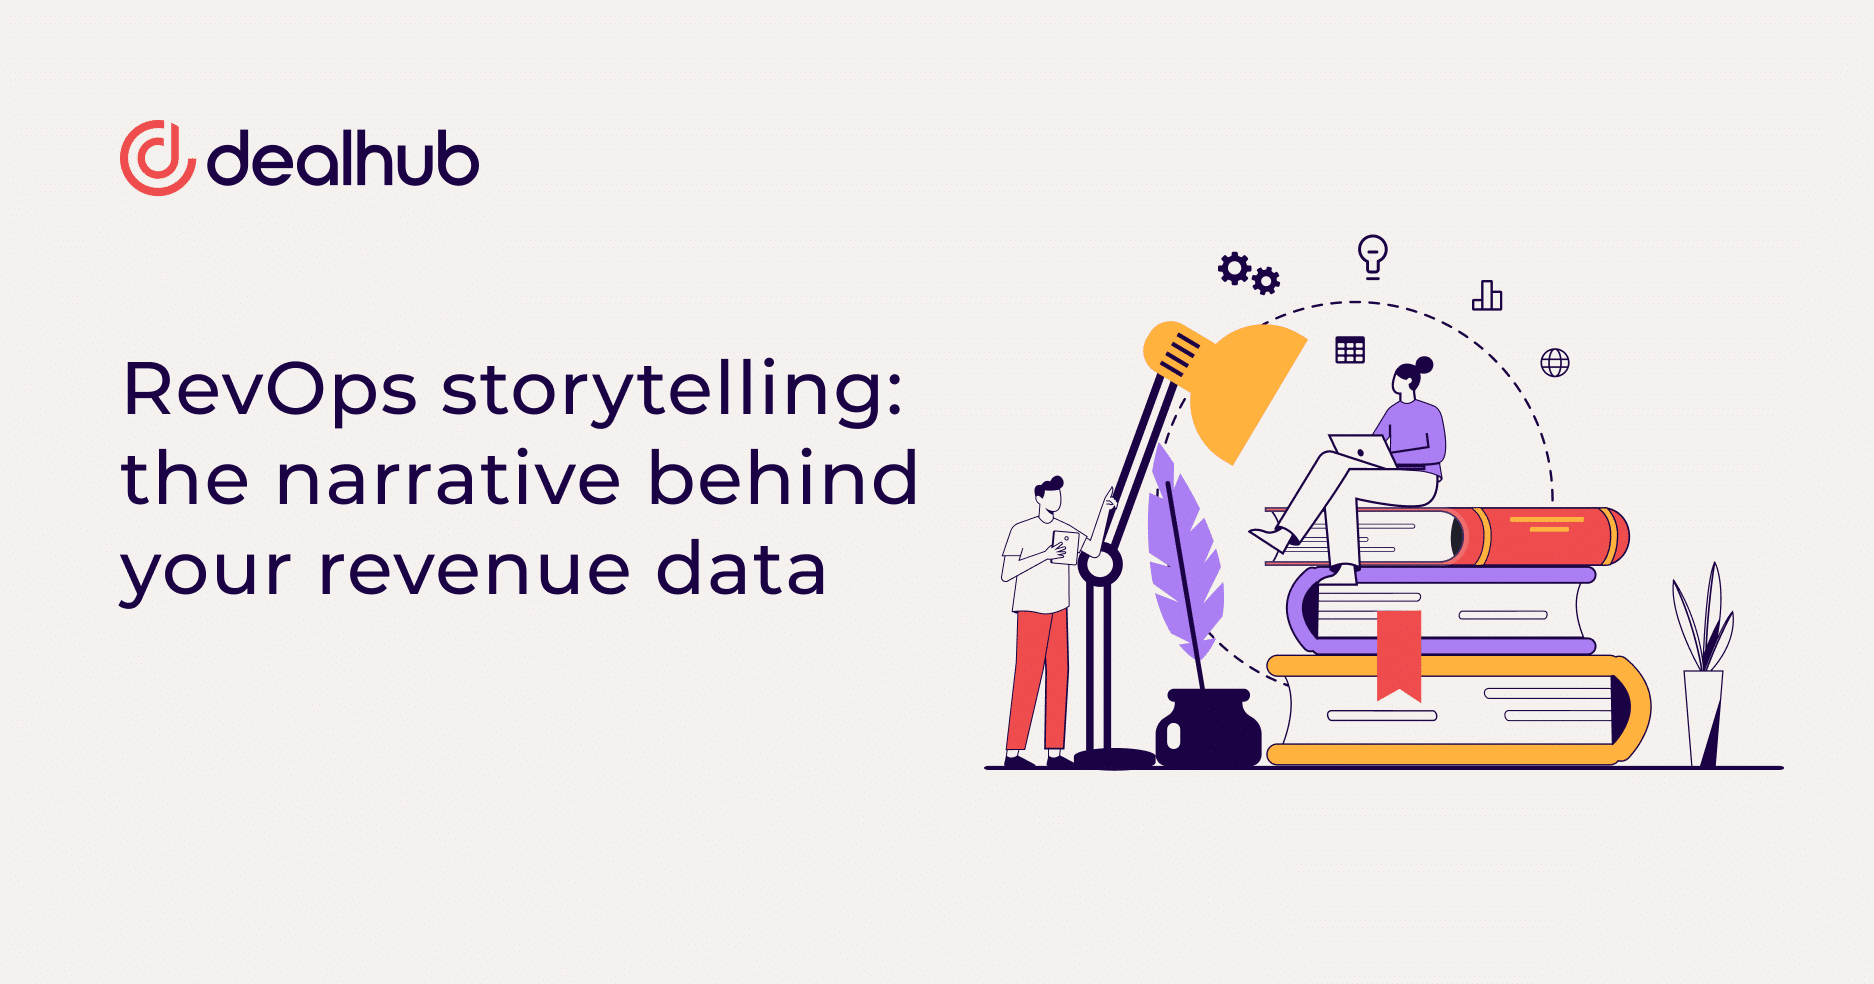 The narrative behind revenue data